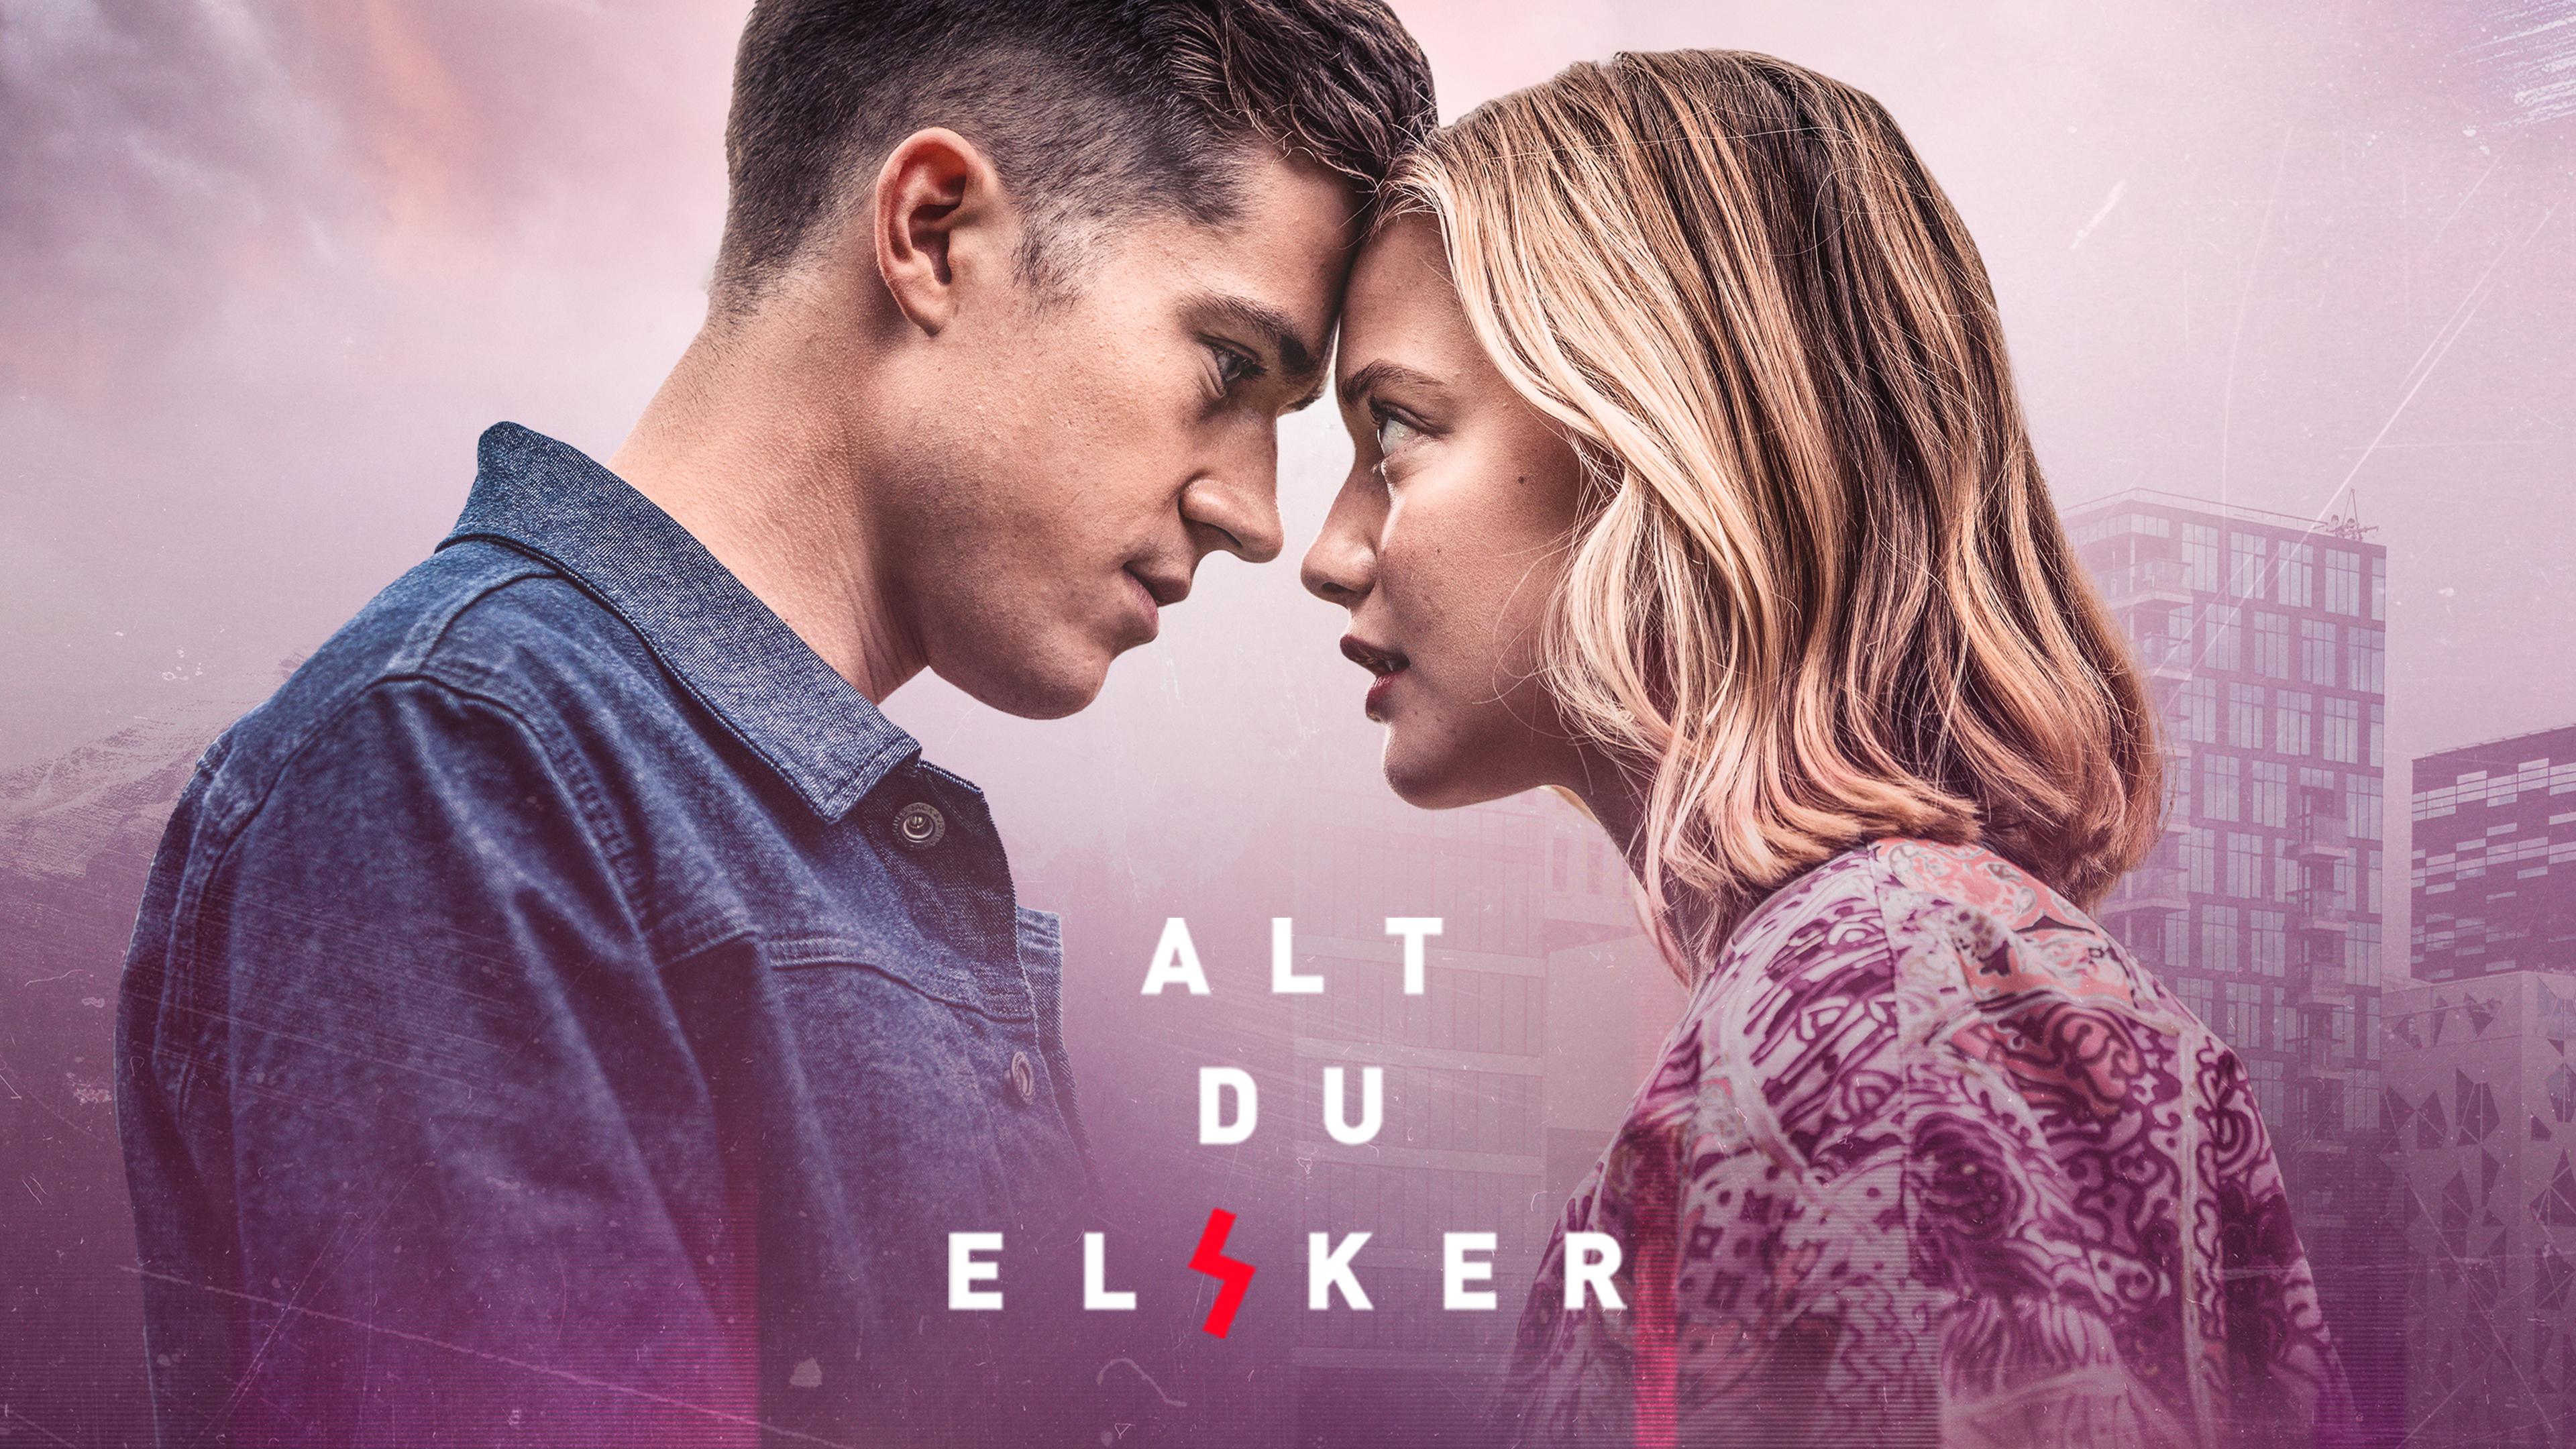 TV ratings for Alt Du Elsker in Poland. Discovery+ TV series